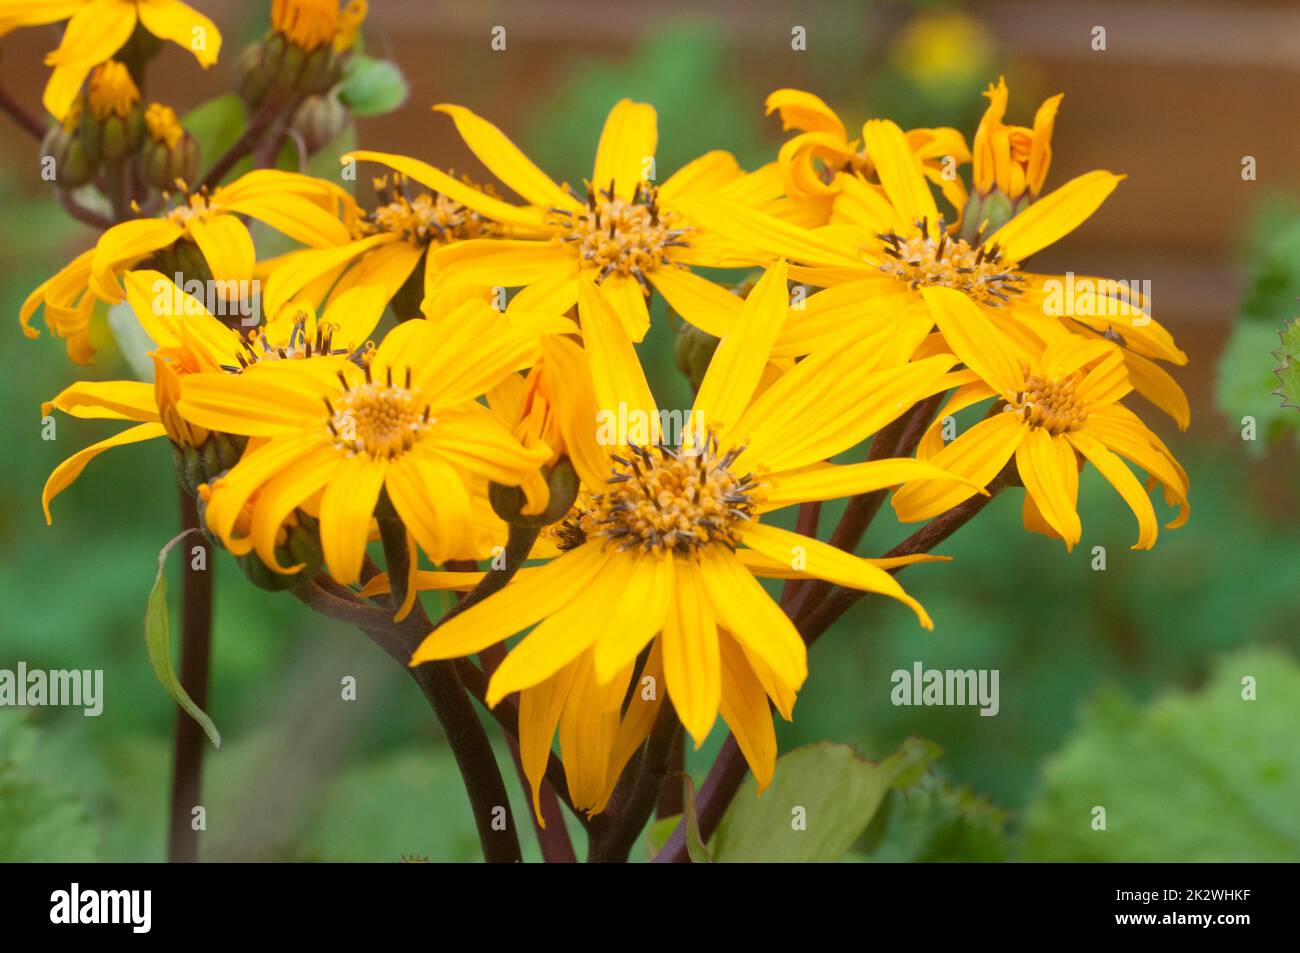 Ligularia dentata flowers in the garden, close up shot Stock Photo